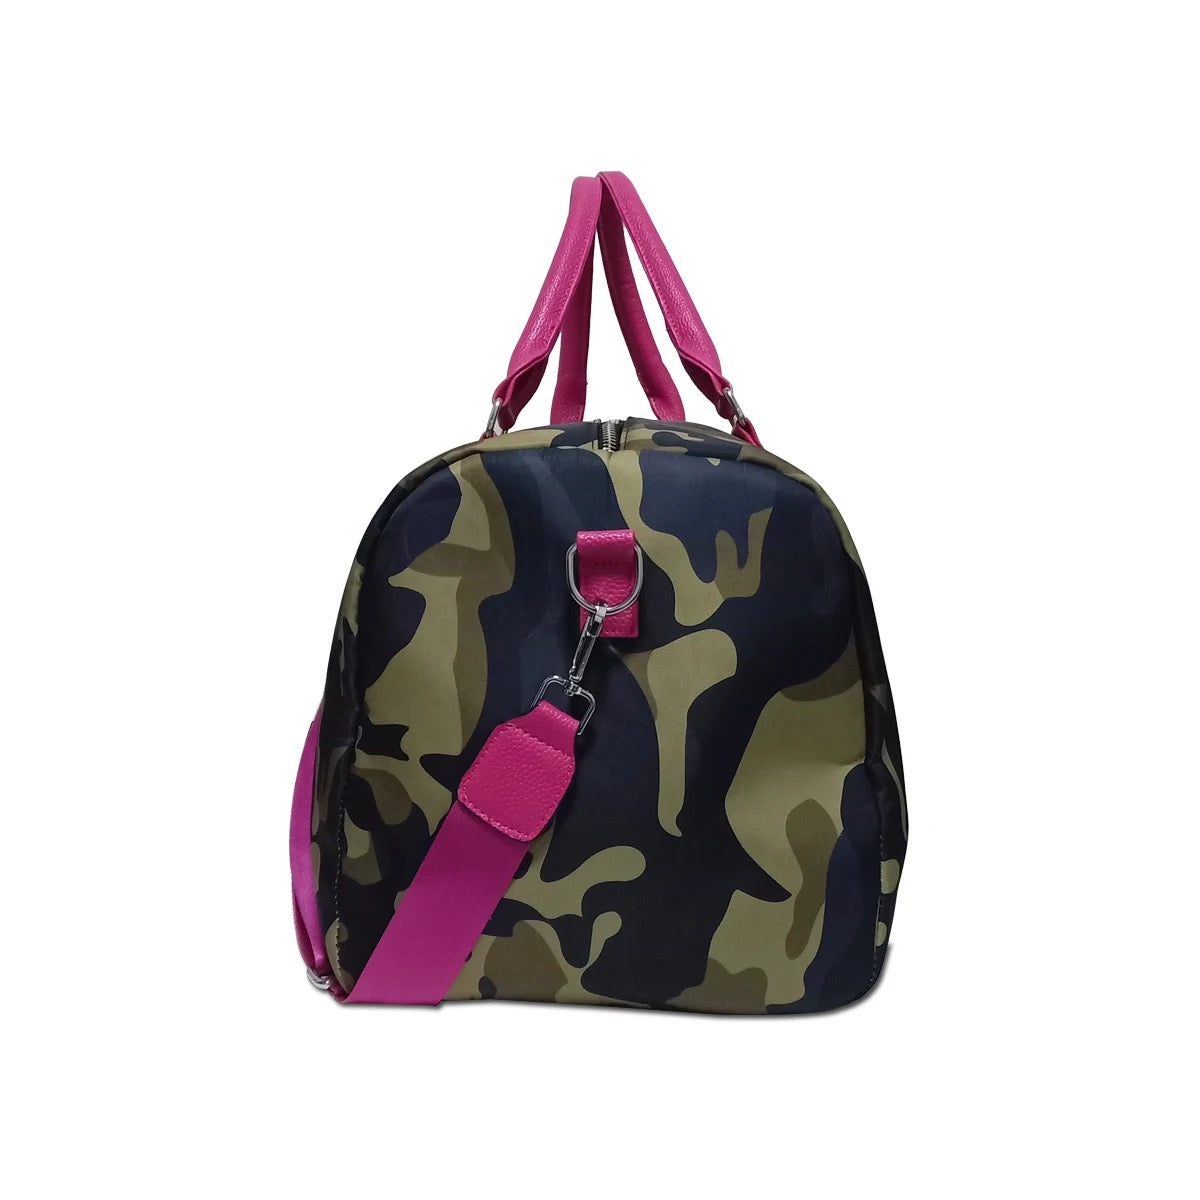 The Weekender Duffle Bag - Pink Camo